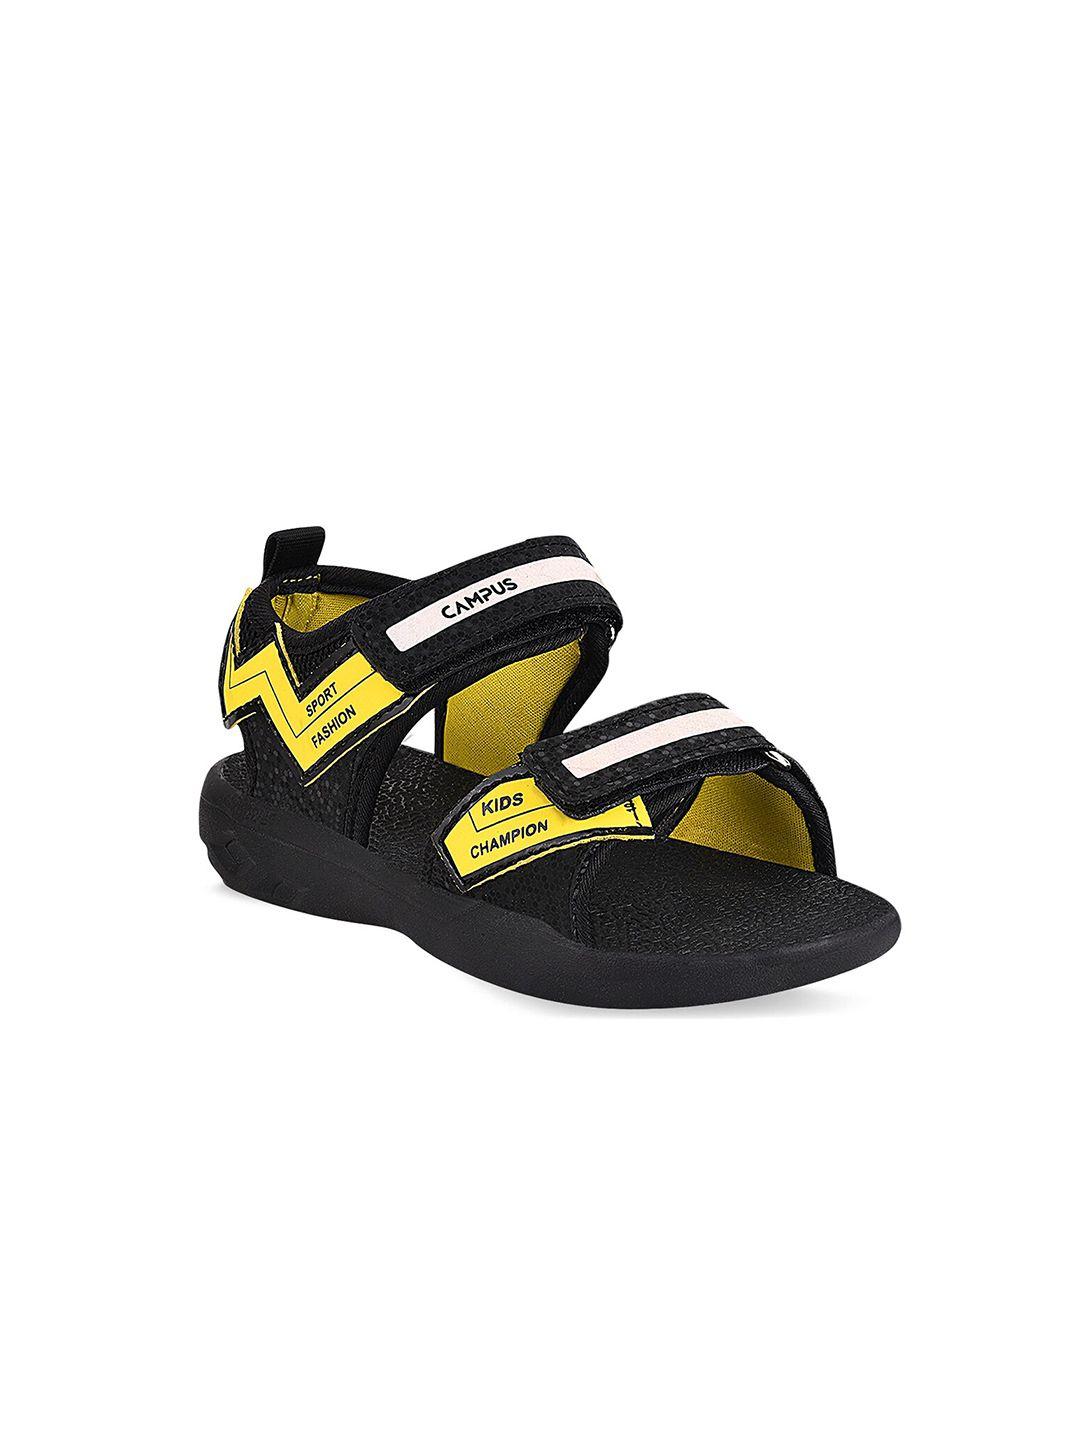 campus-kids-black-&-yellow-sports-sandals